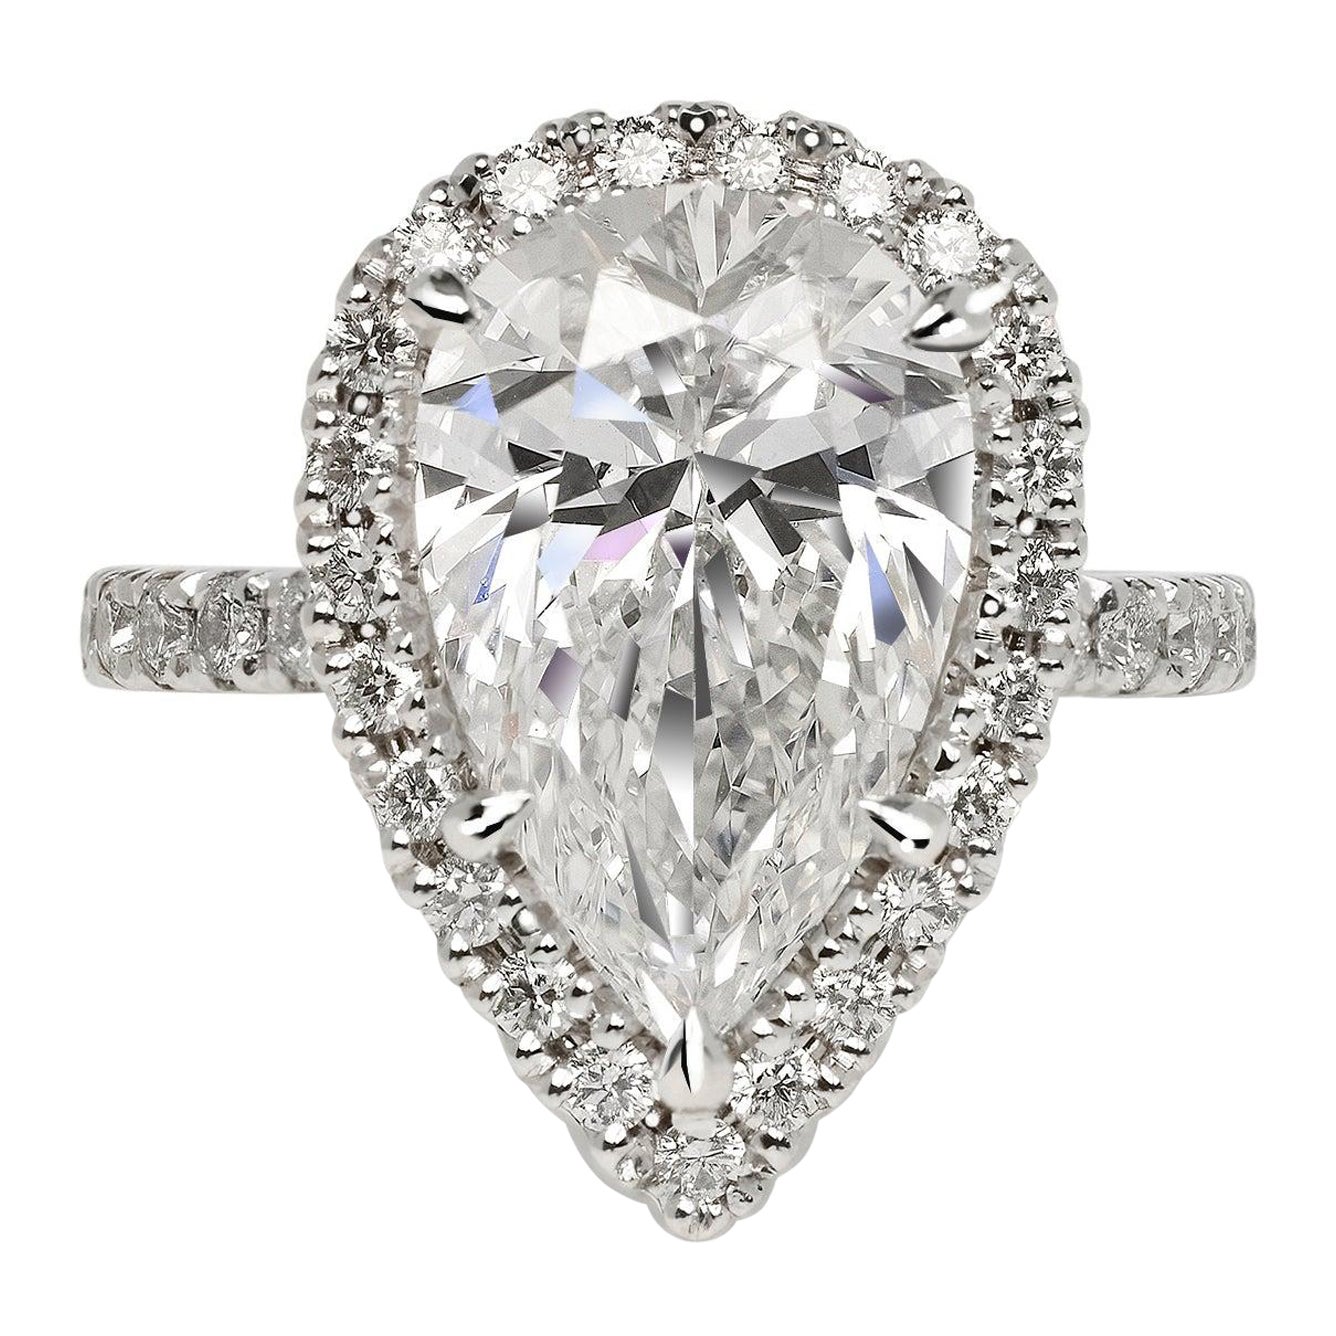 4 Carat Pear Shape Diamond Engagement Ring GIA Certified D VVS1 For Sale